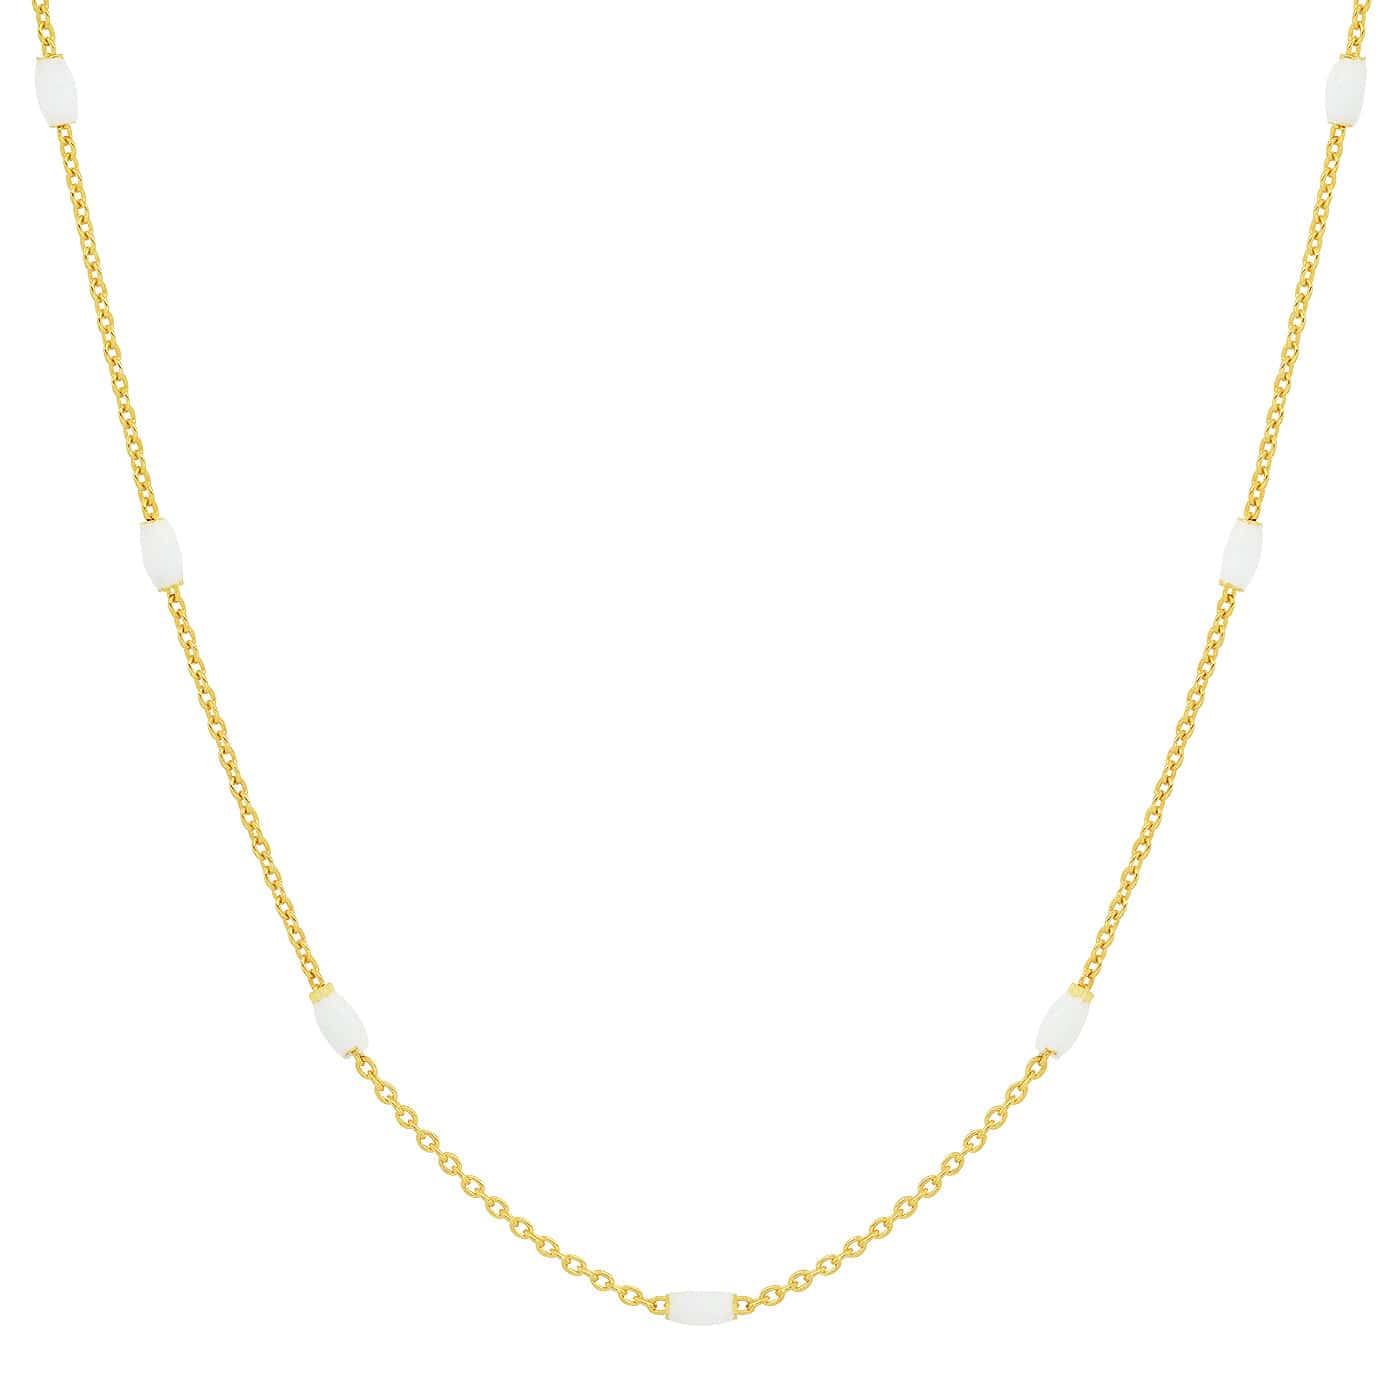 TAI JEWELRY Necklace White Enamel Bead Chain